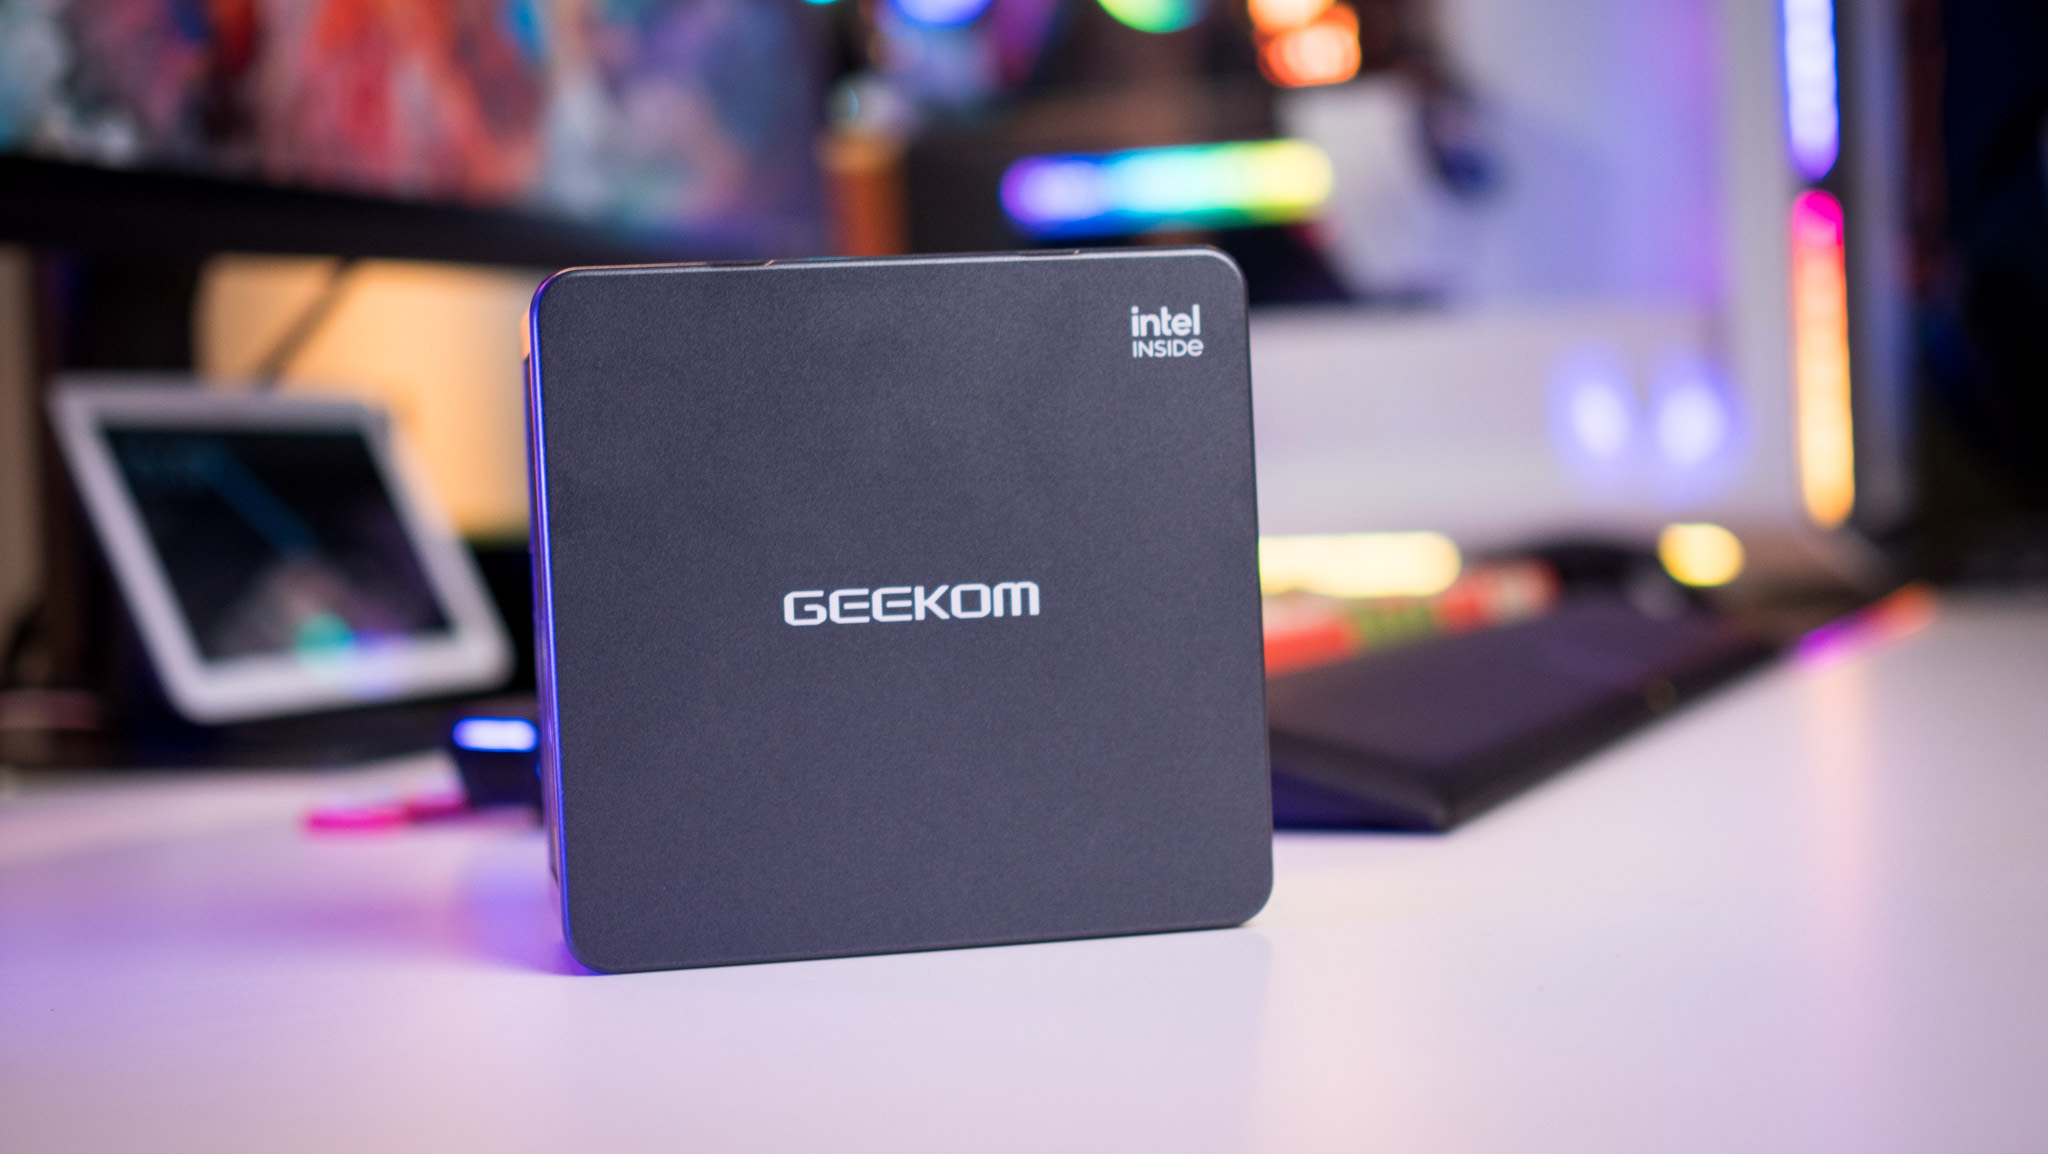 Geekom IT8 Mini PC Review